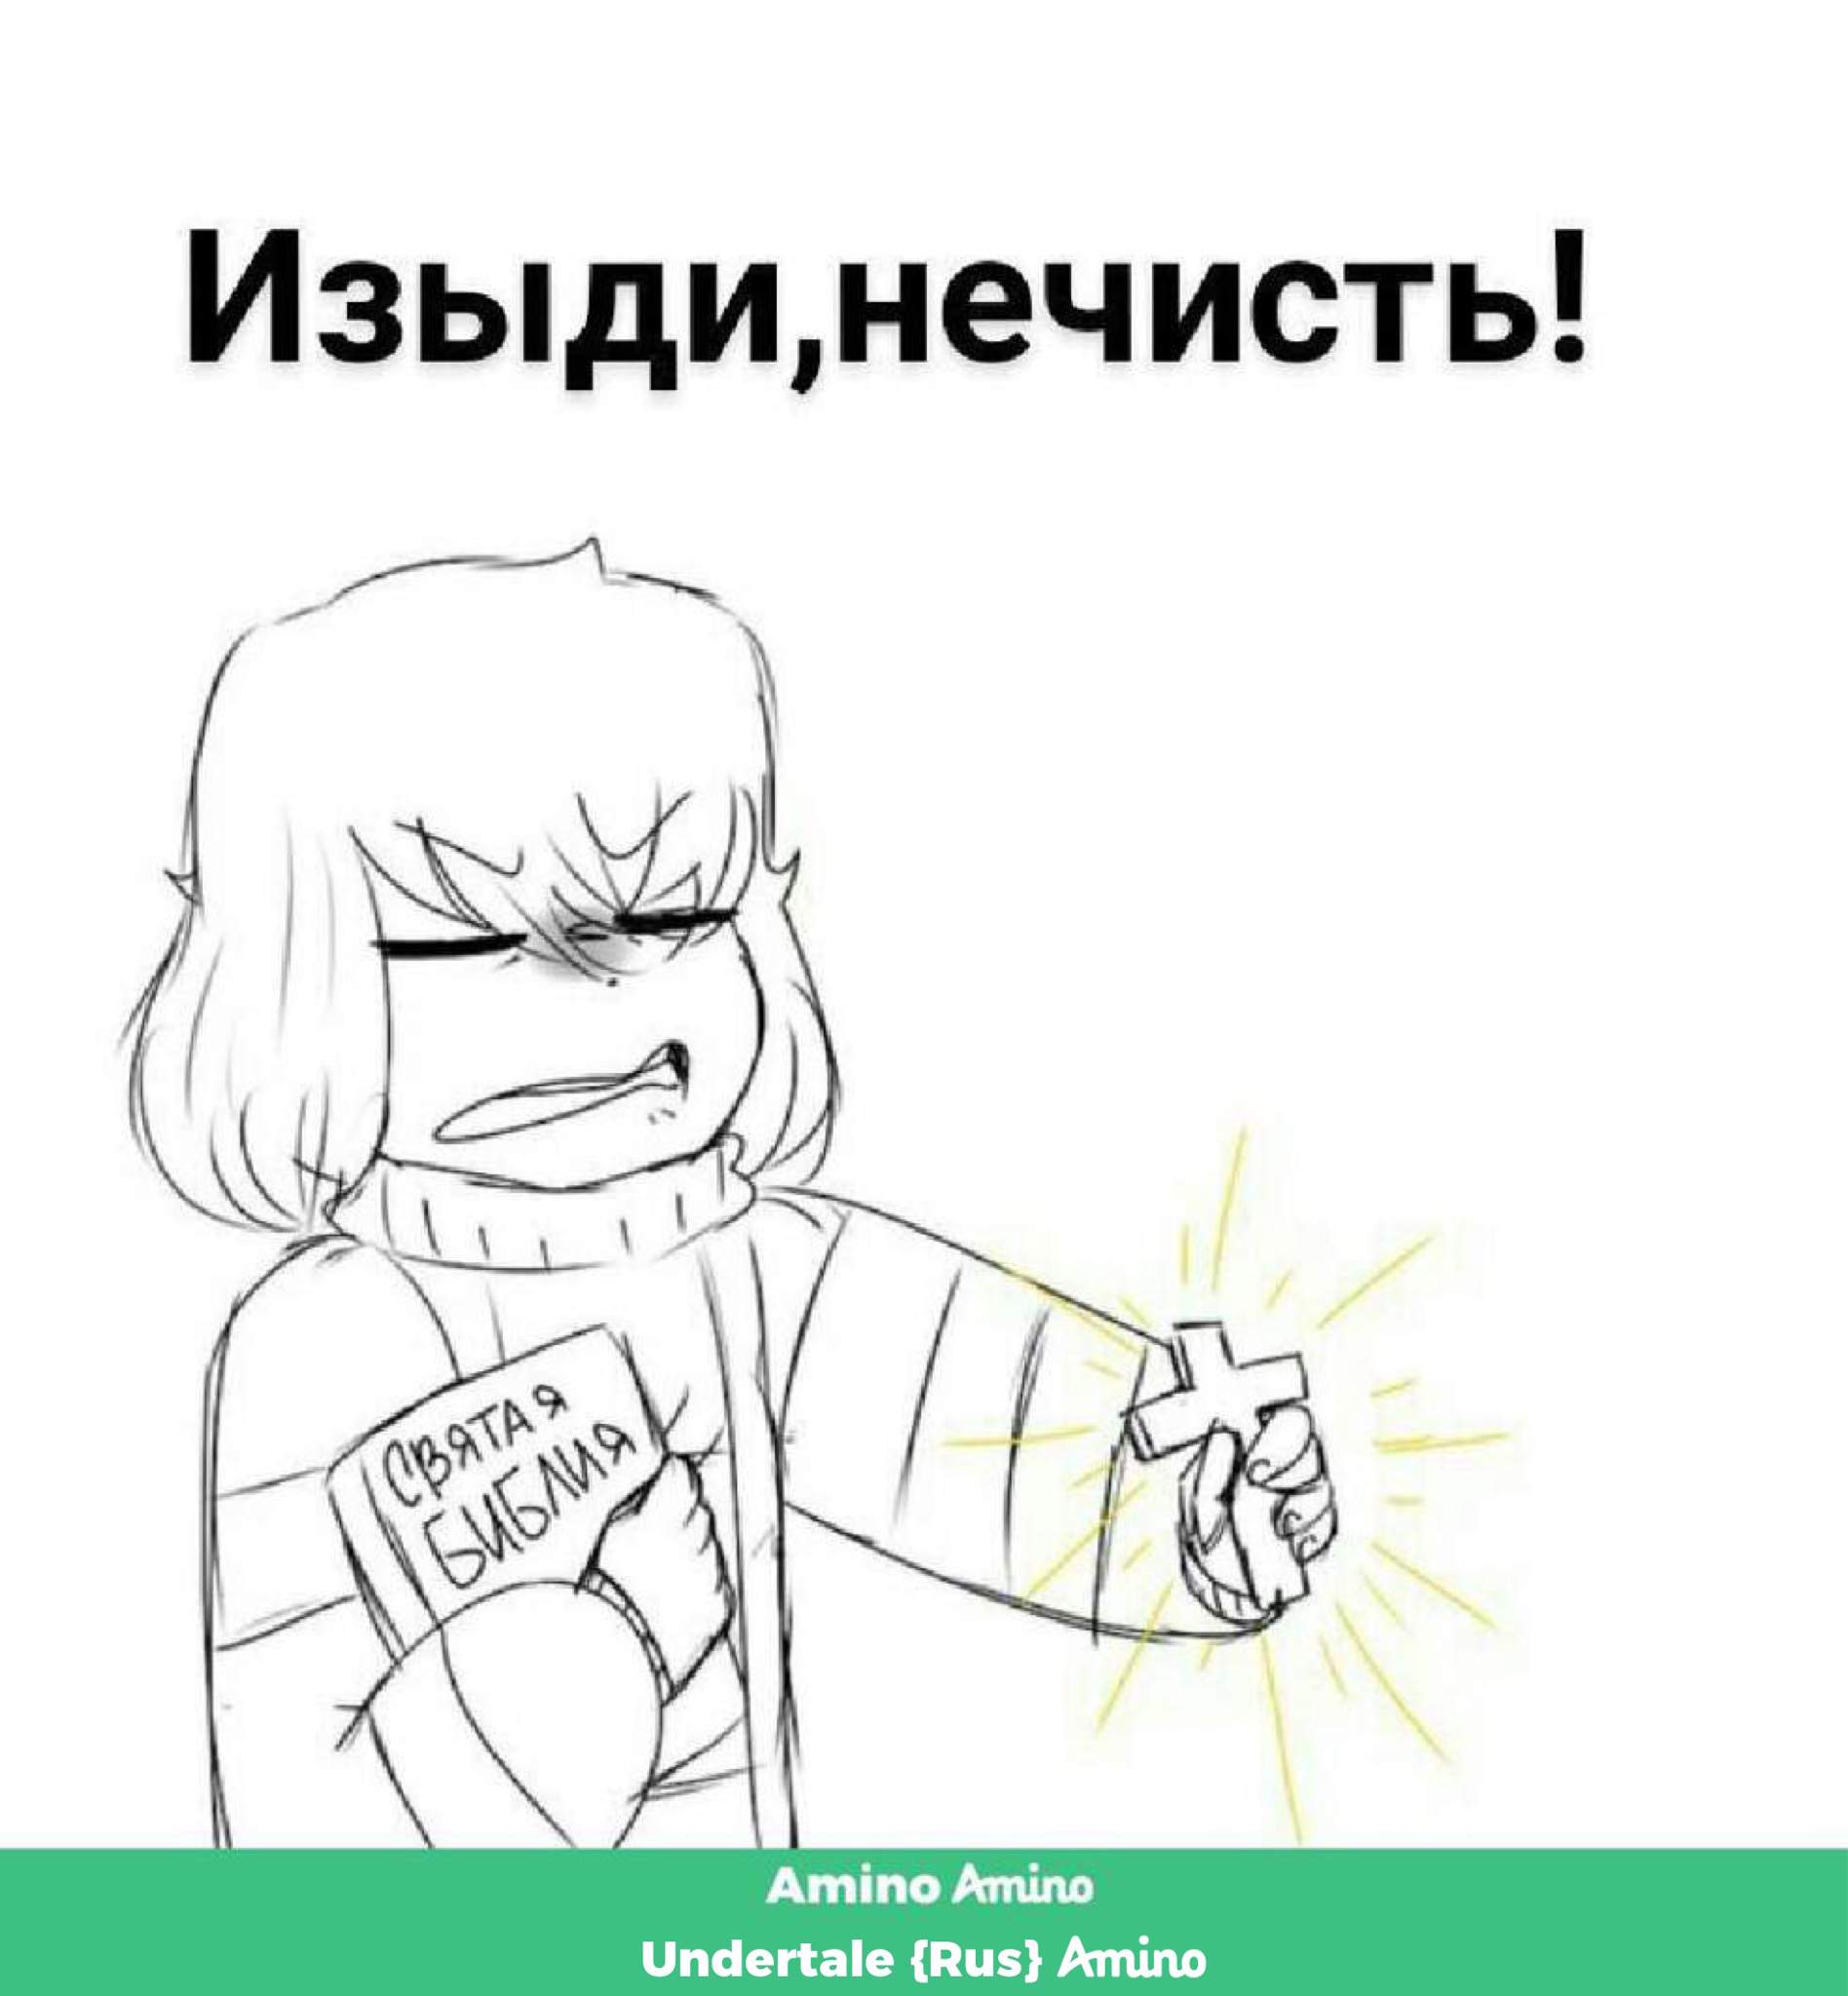 картинки андертейл на русском